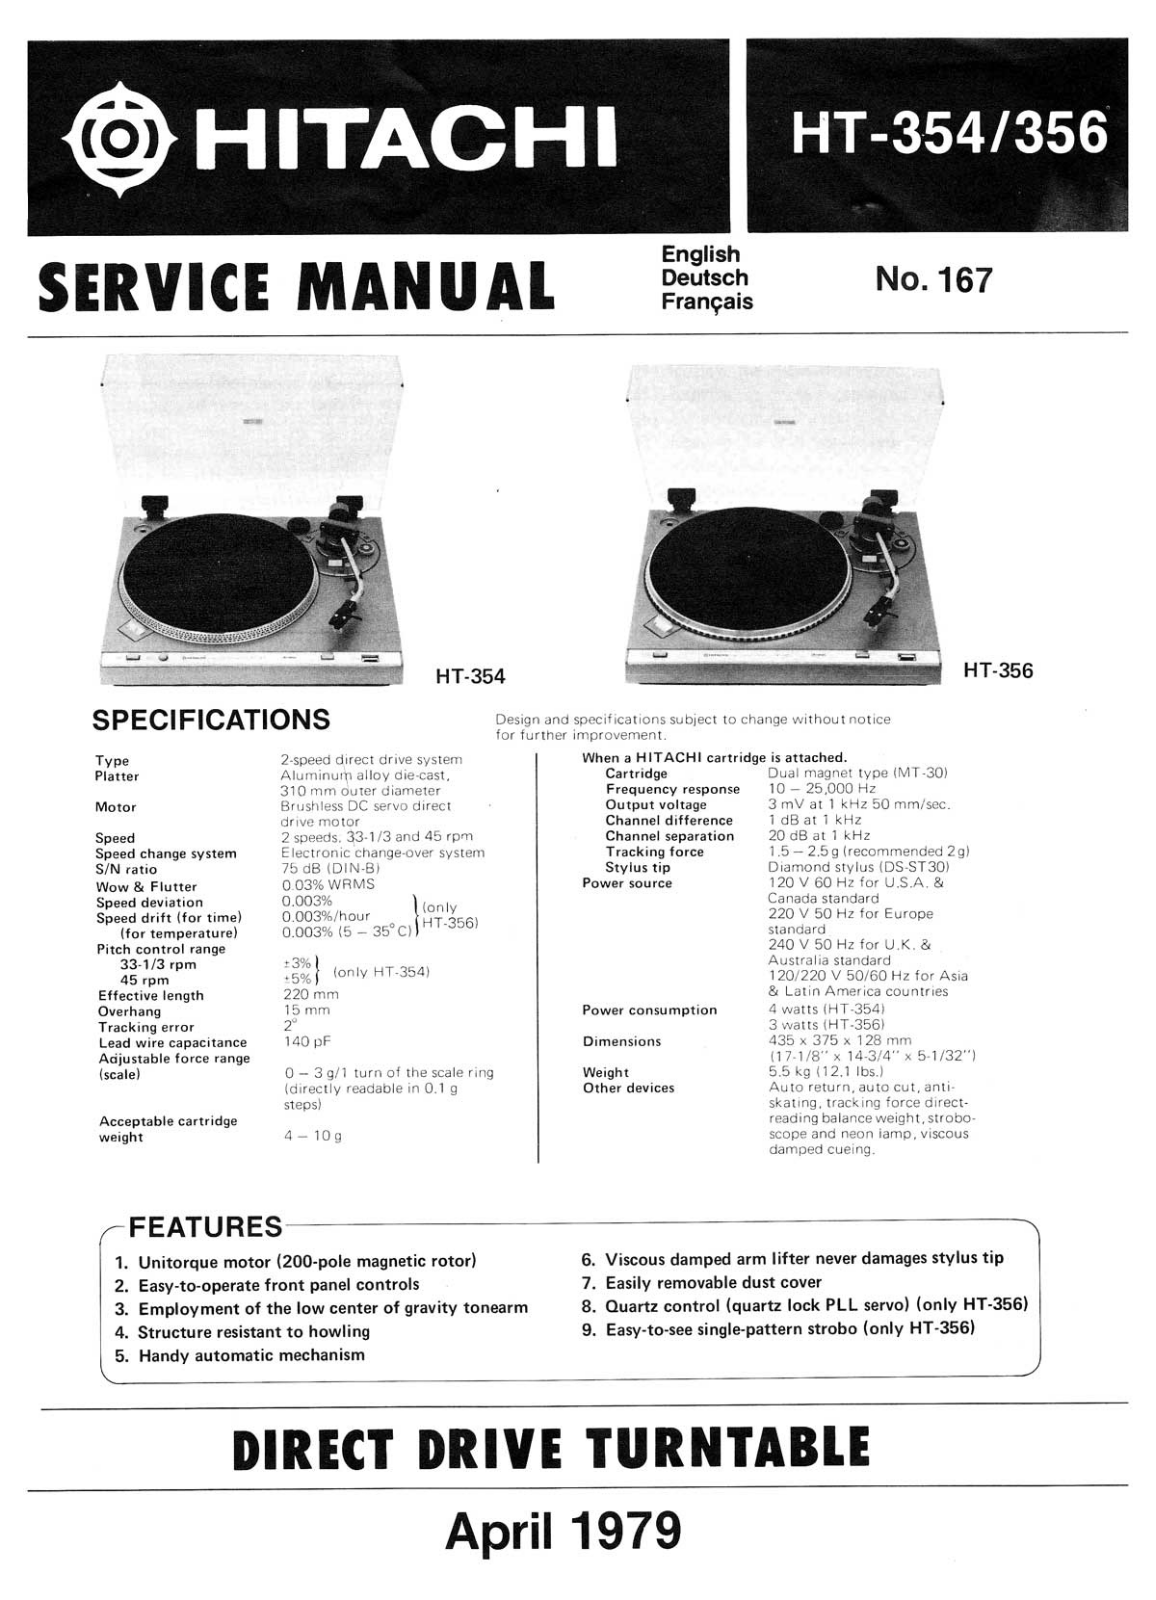 Hitachi HT-354, HT-356 Service Manual